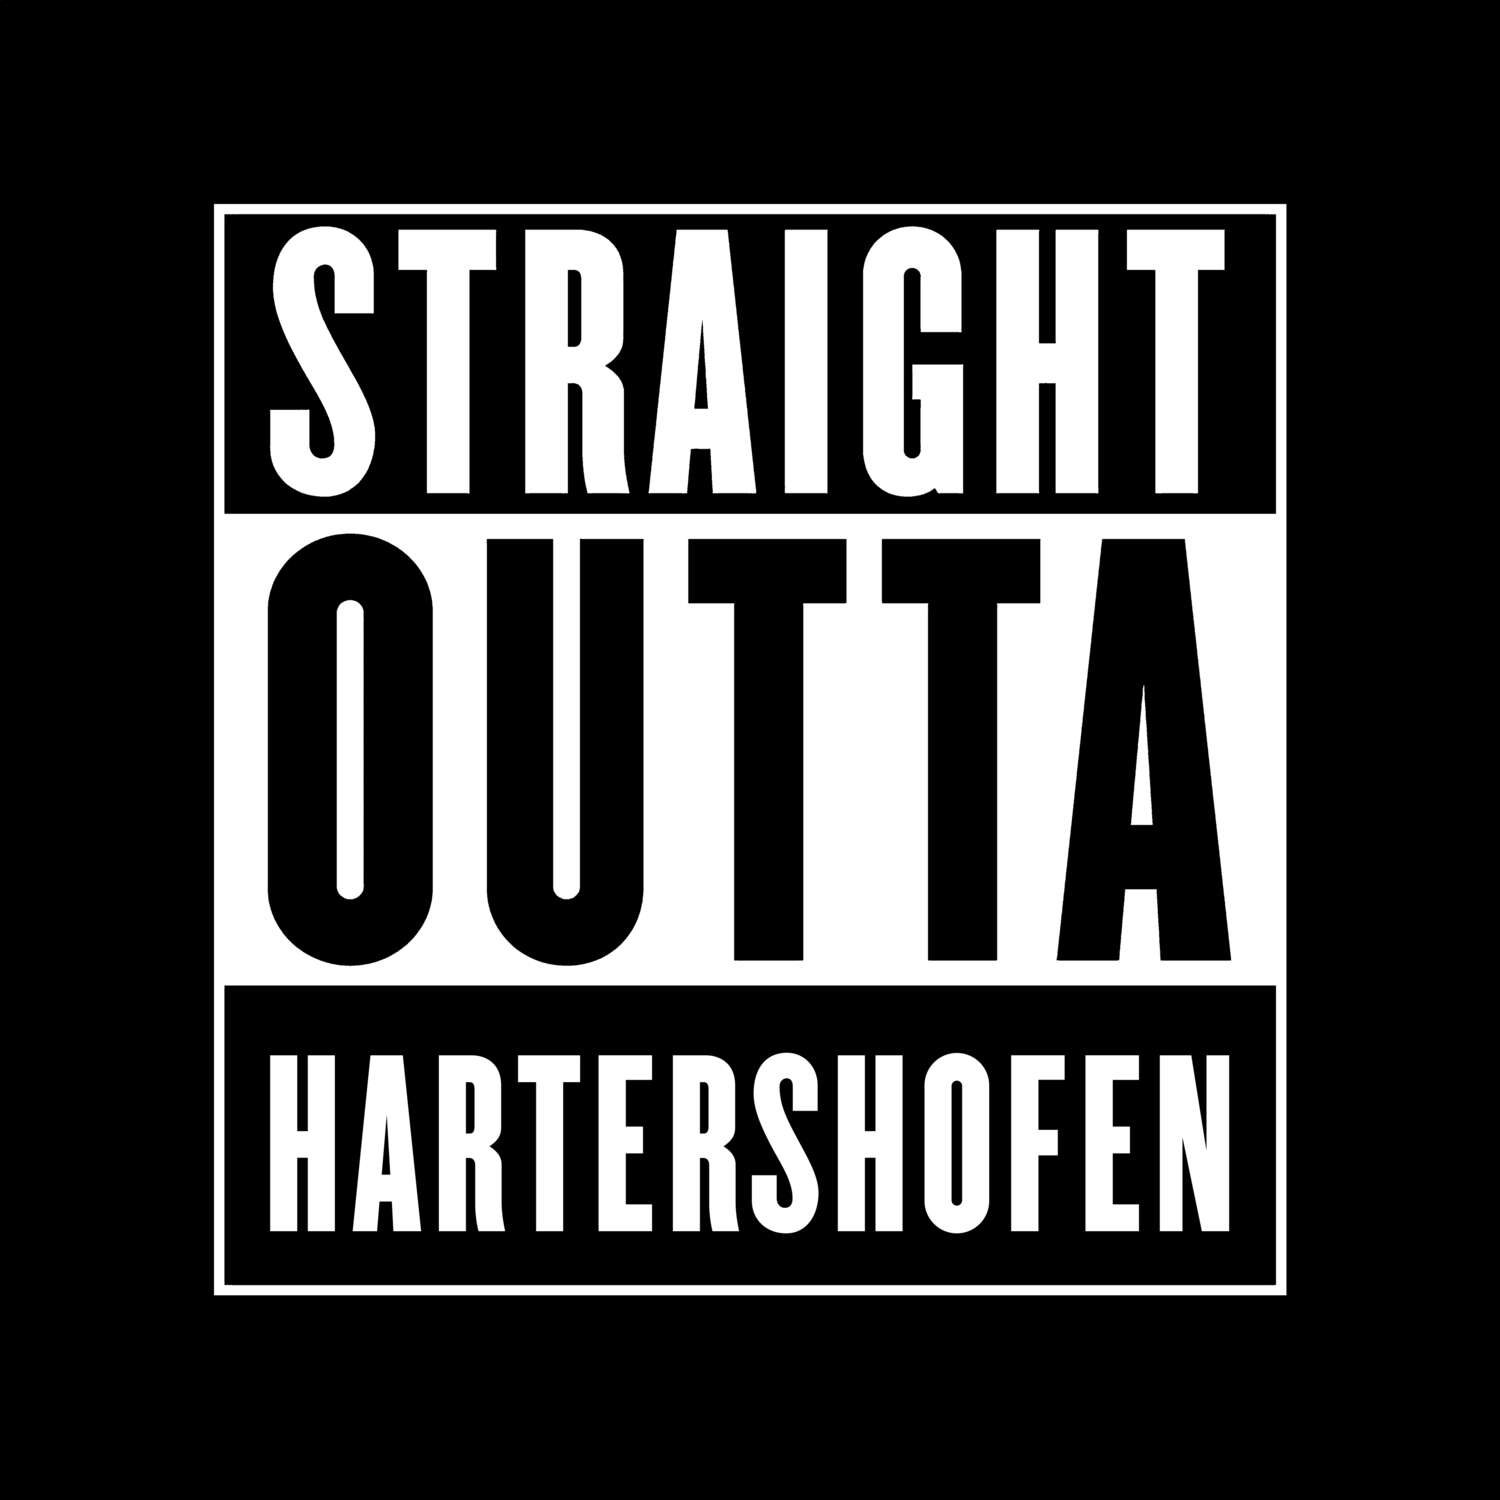 Hartershofen T-Shirt »Straight Outta«